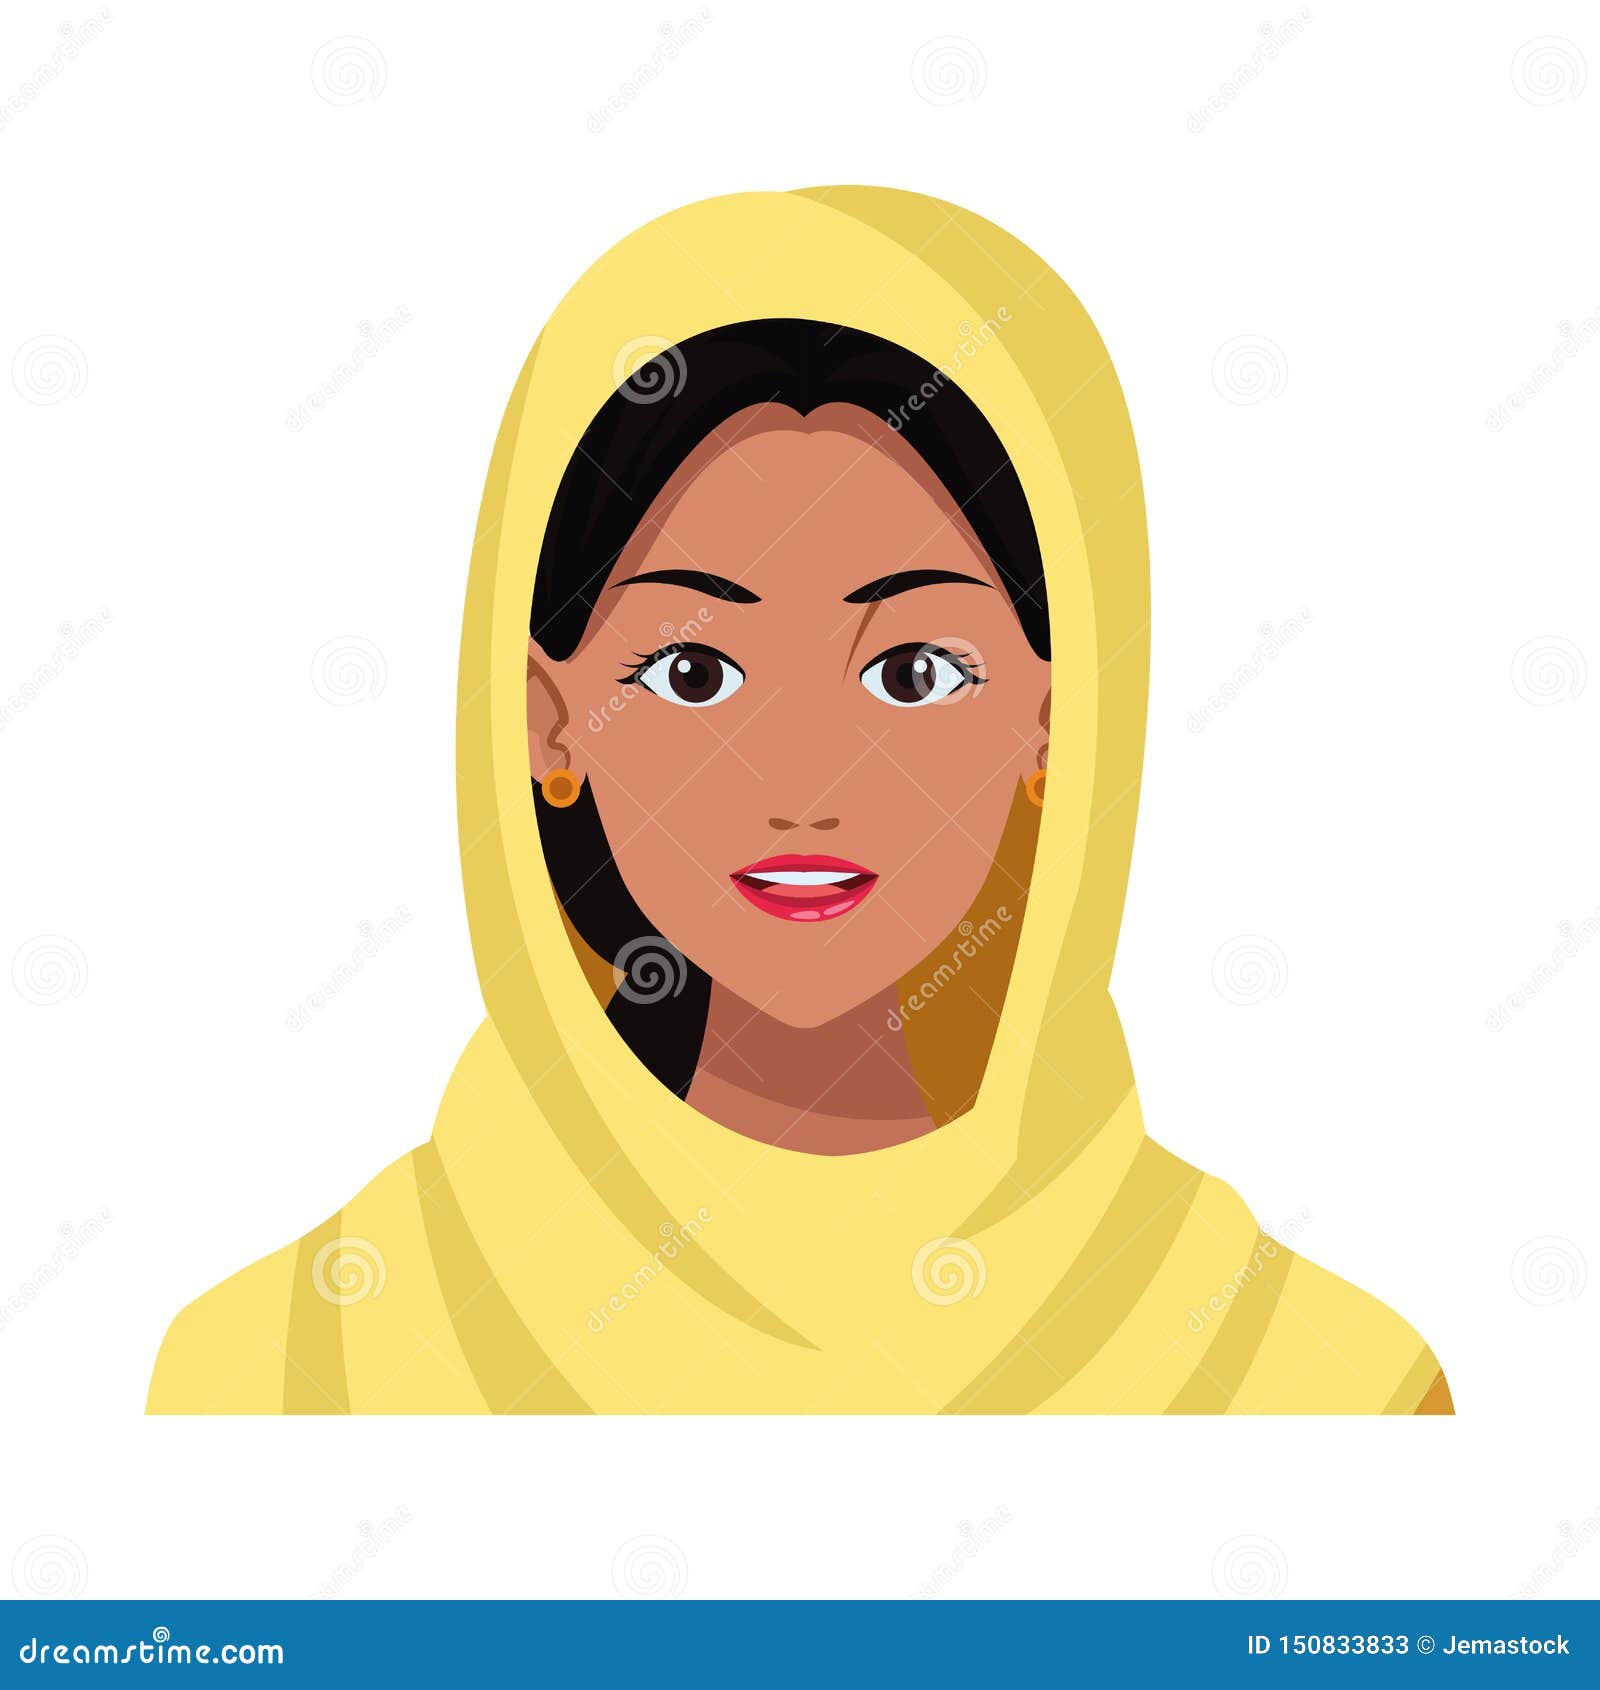 indian woman face avatar cartoon